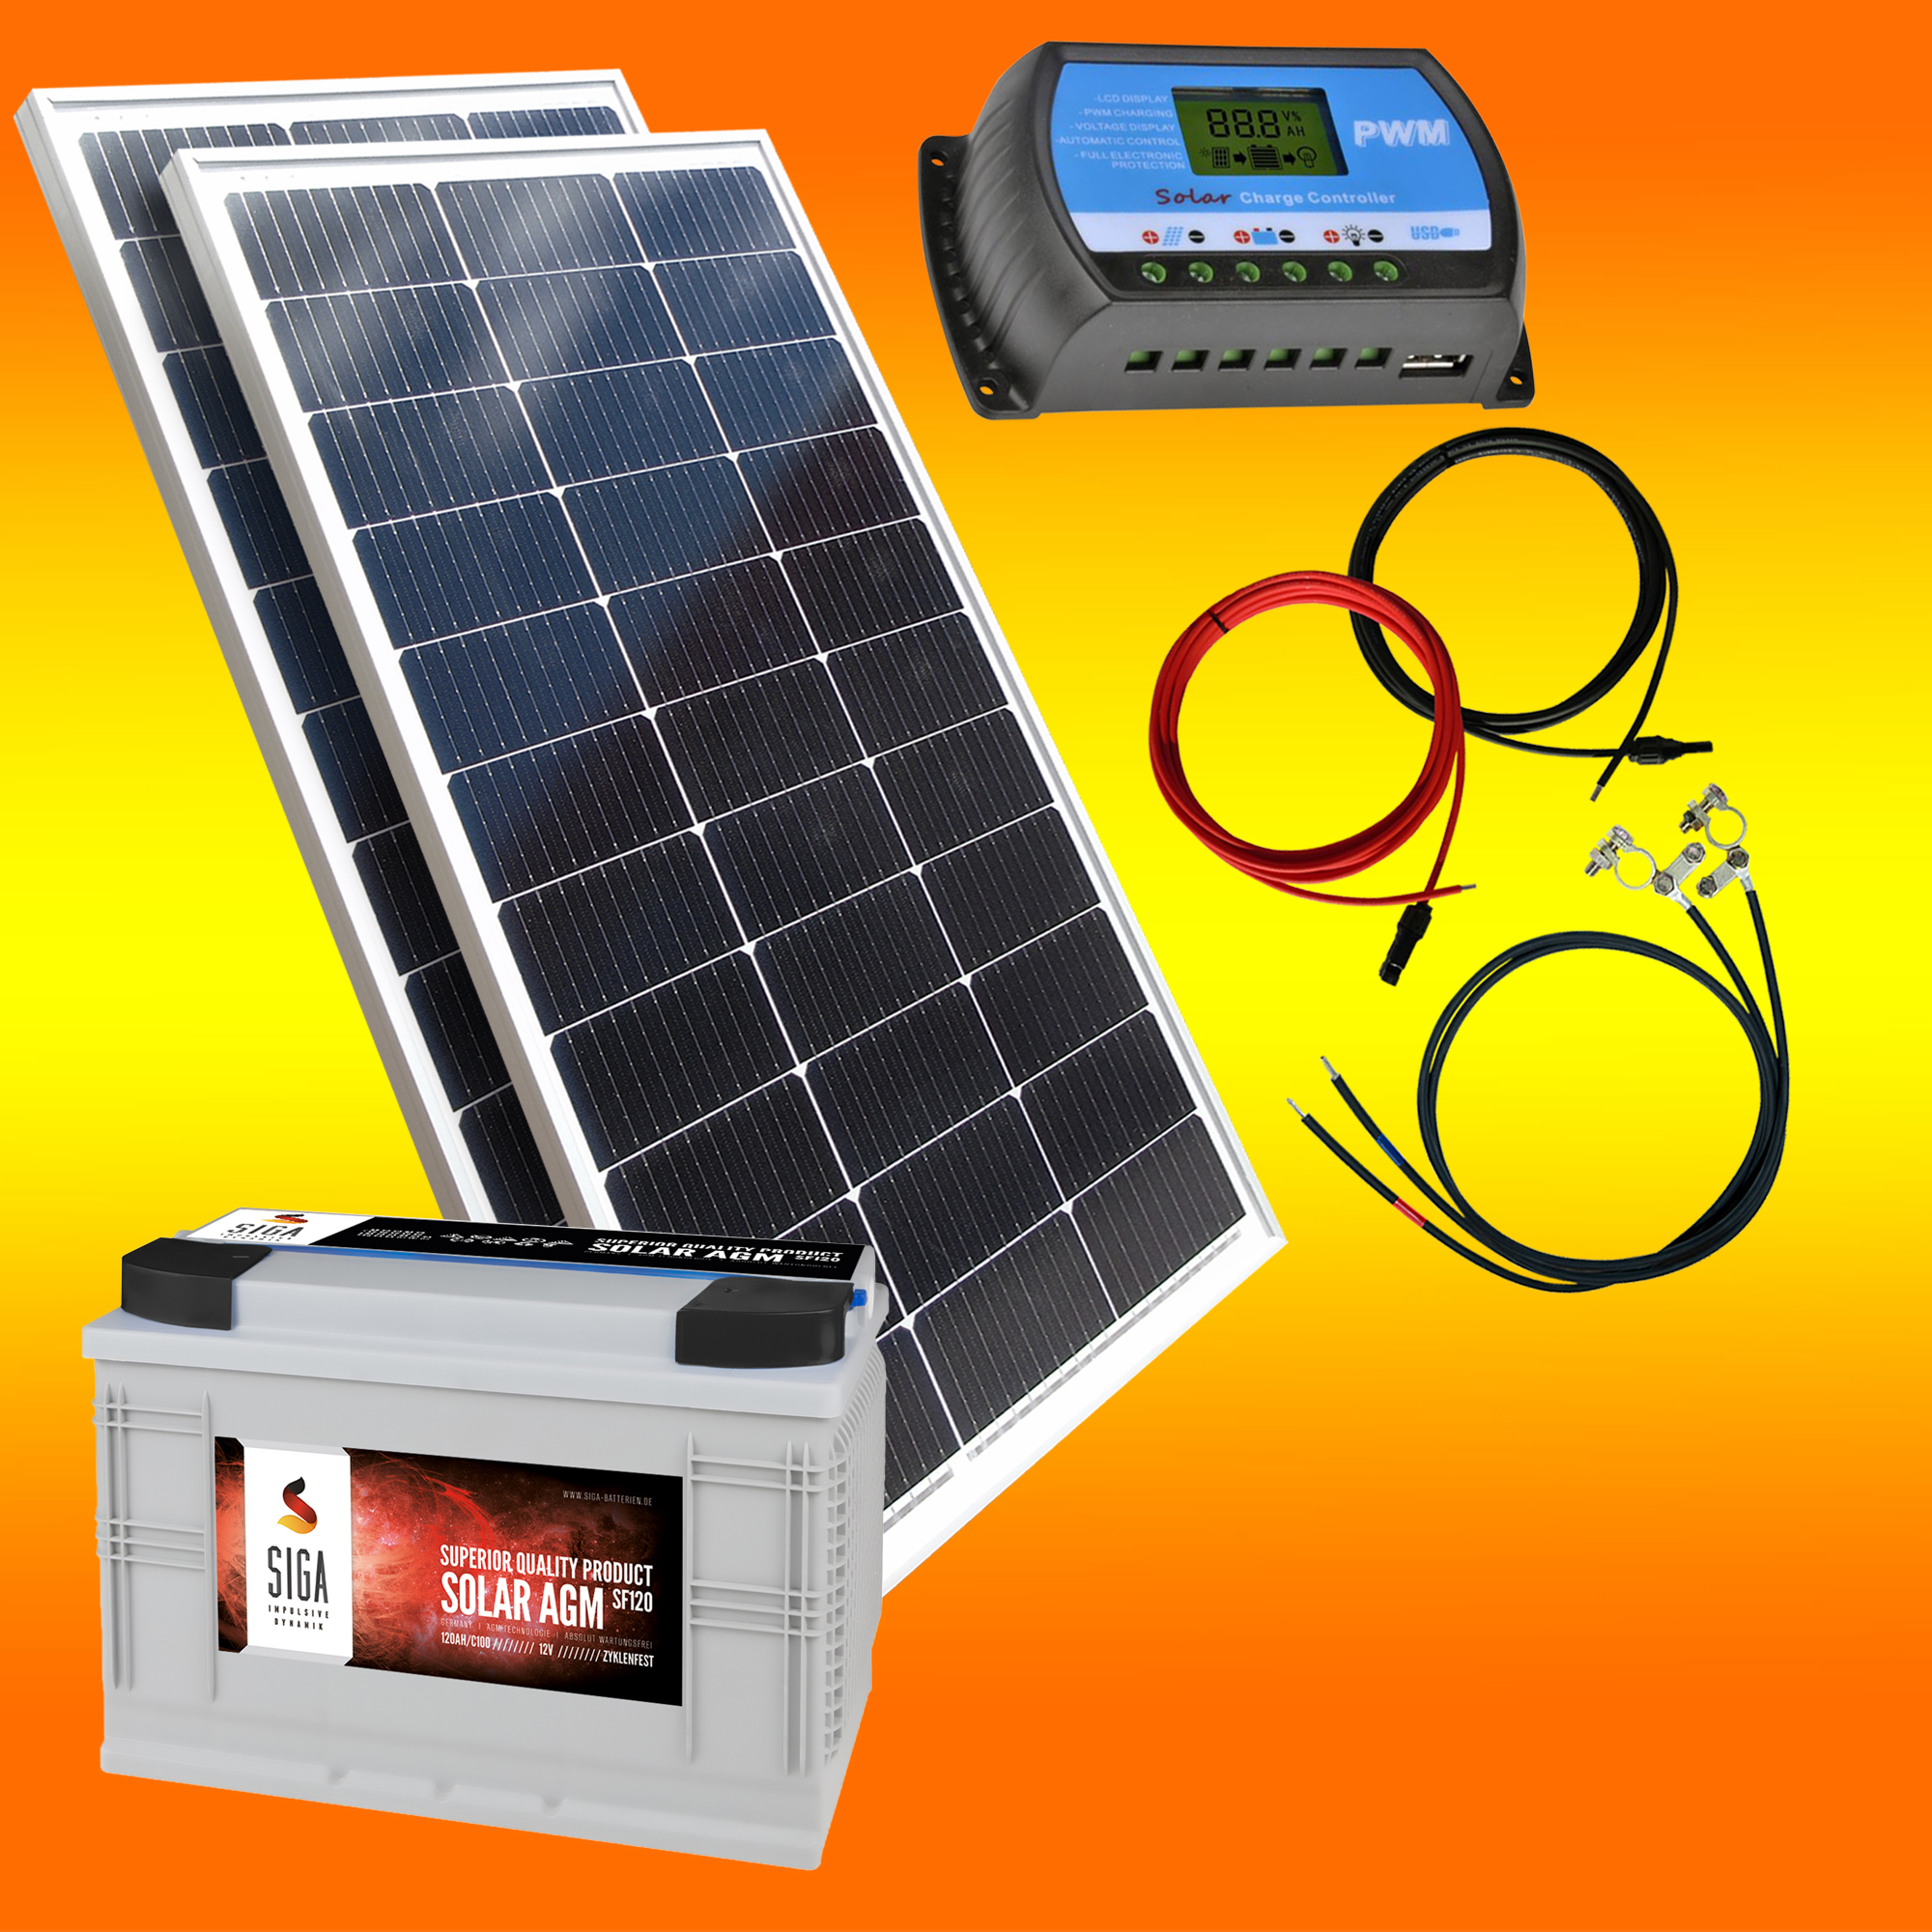 Solarbatterie, SIGA Solar Batterien www.siga-batterien.de/s…